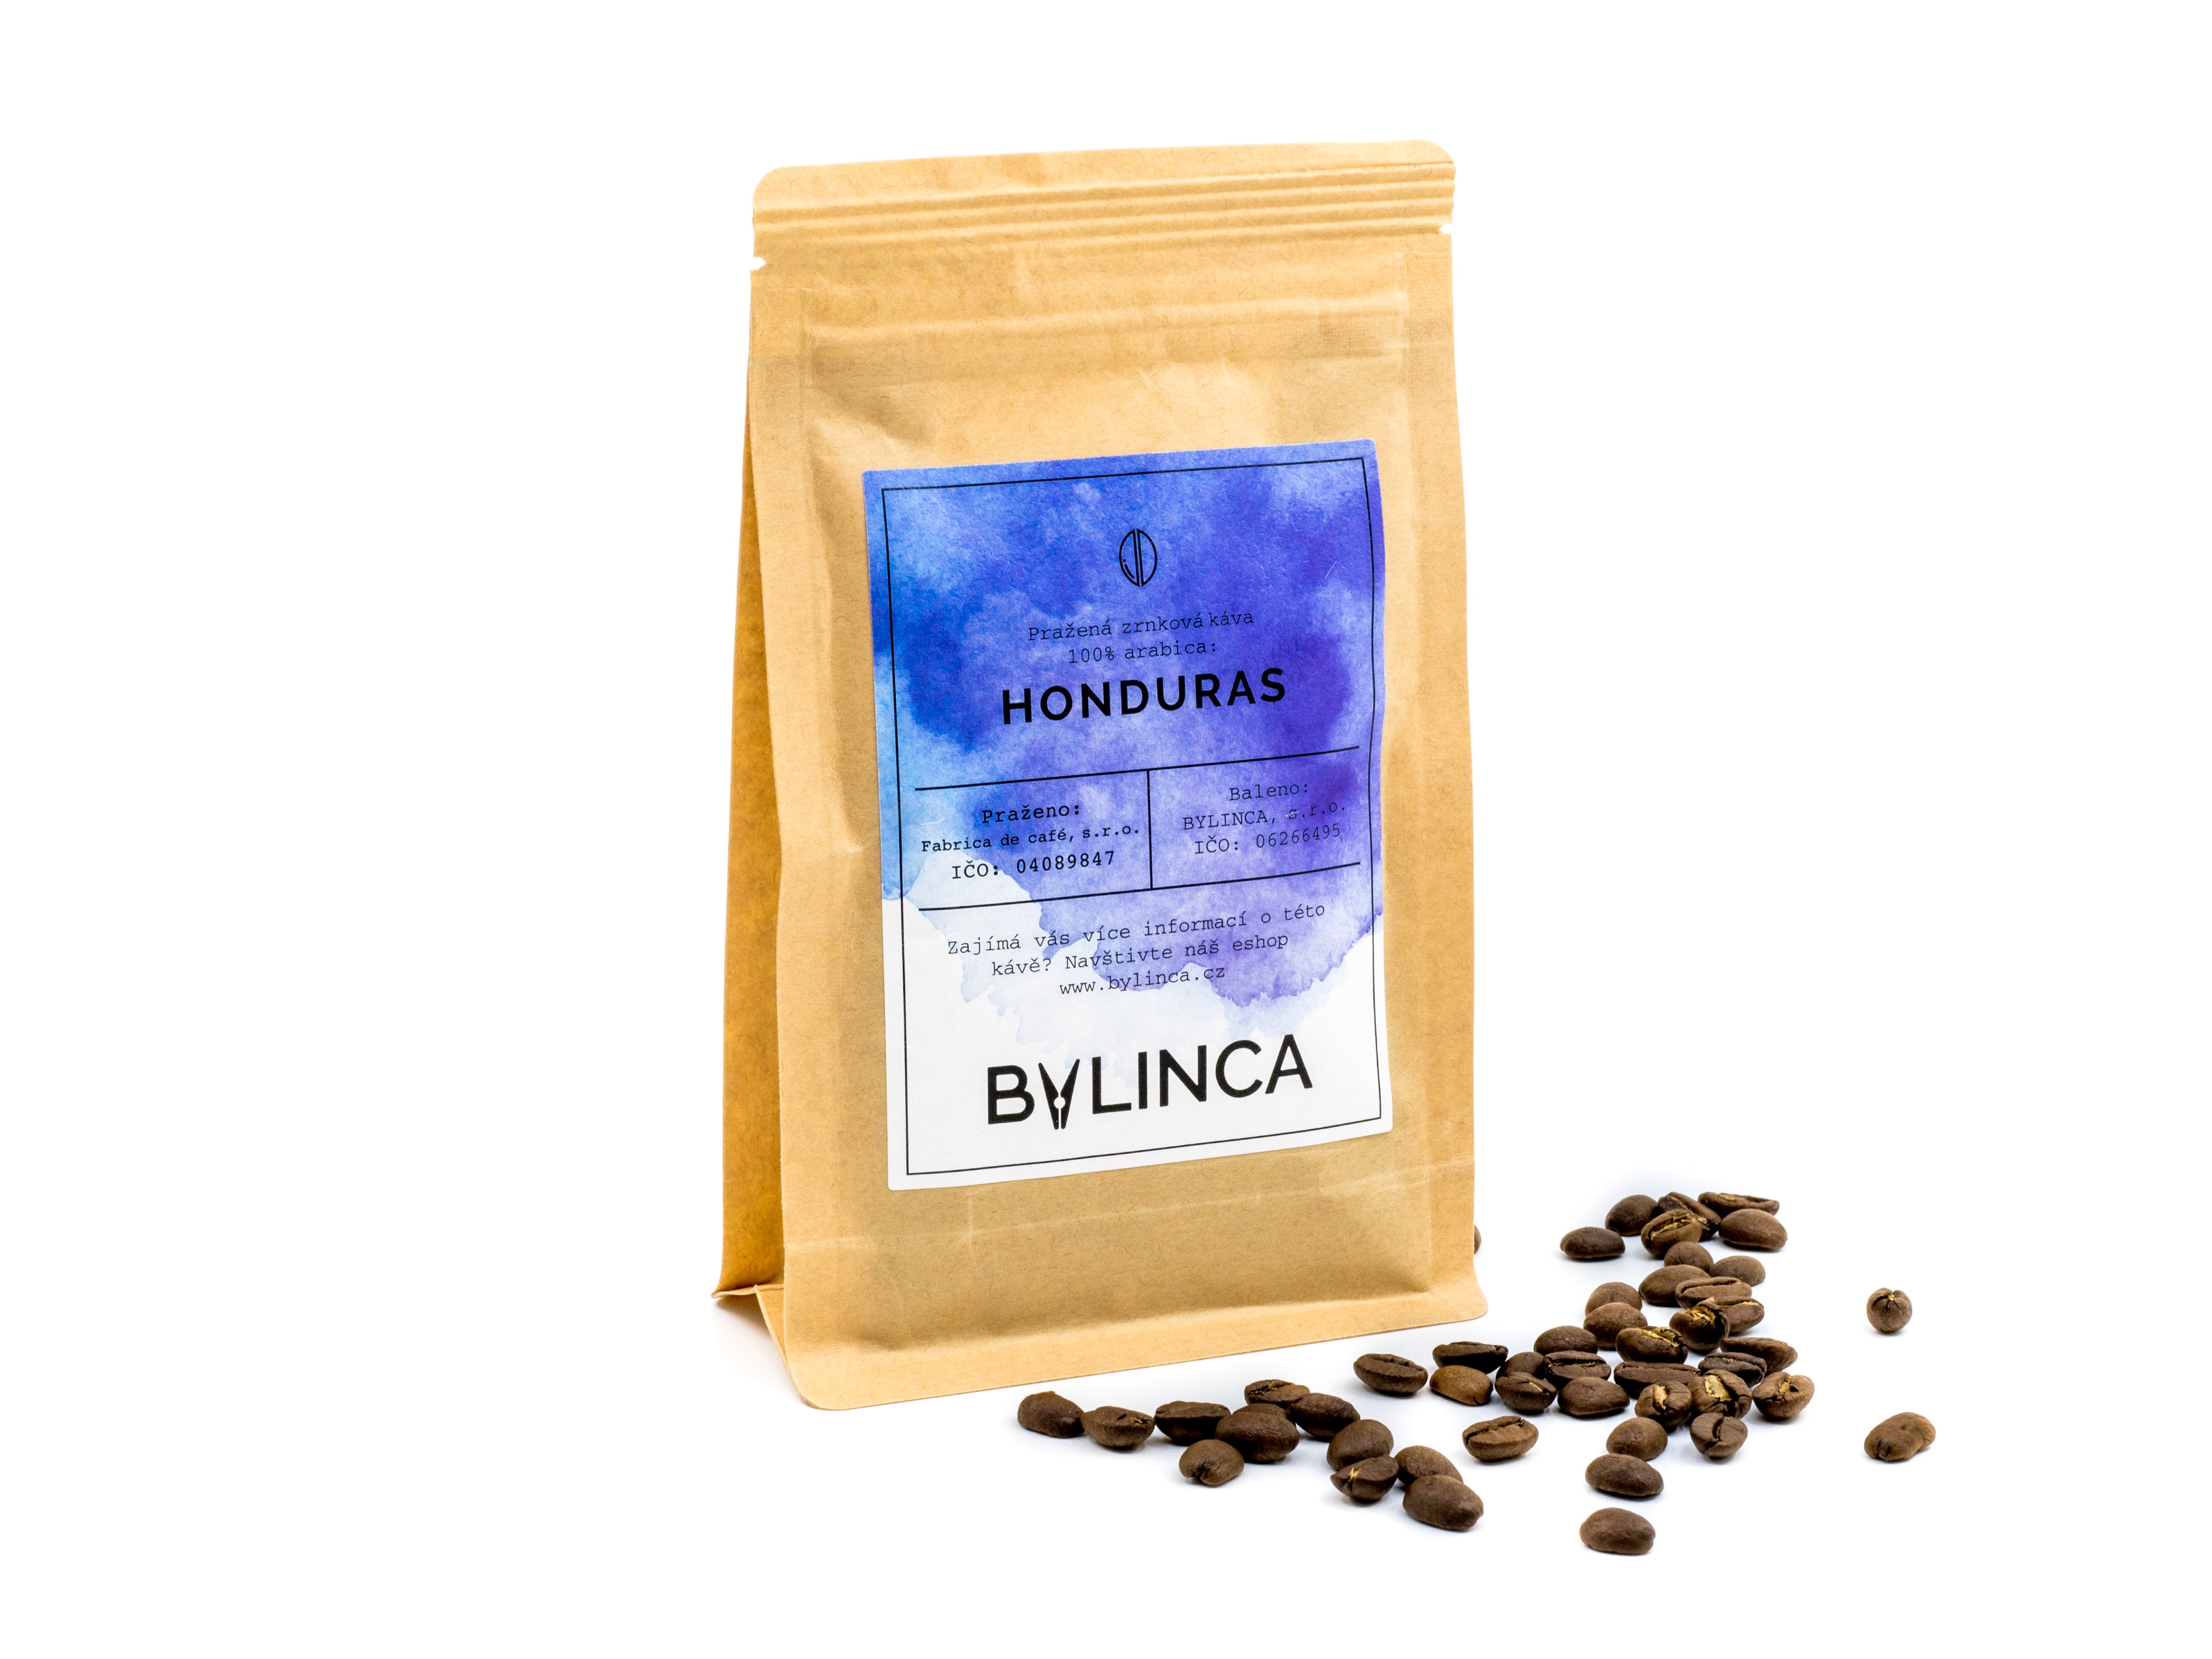 BYLINCA Zrnková káva: Honduras 100g, 250g, 500g, 1000g 1 ks: 100g